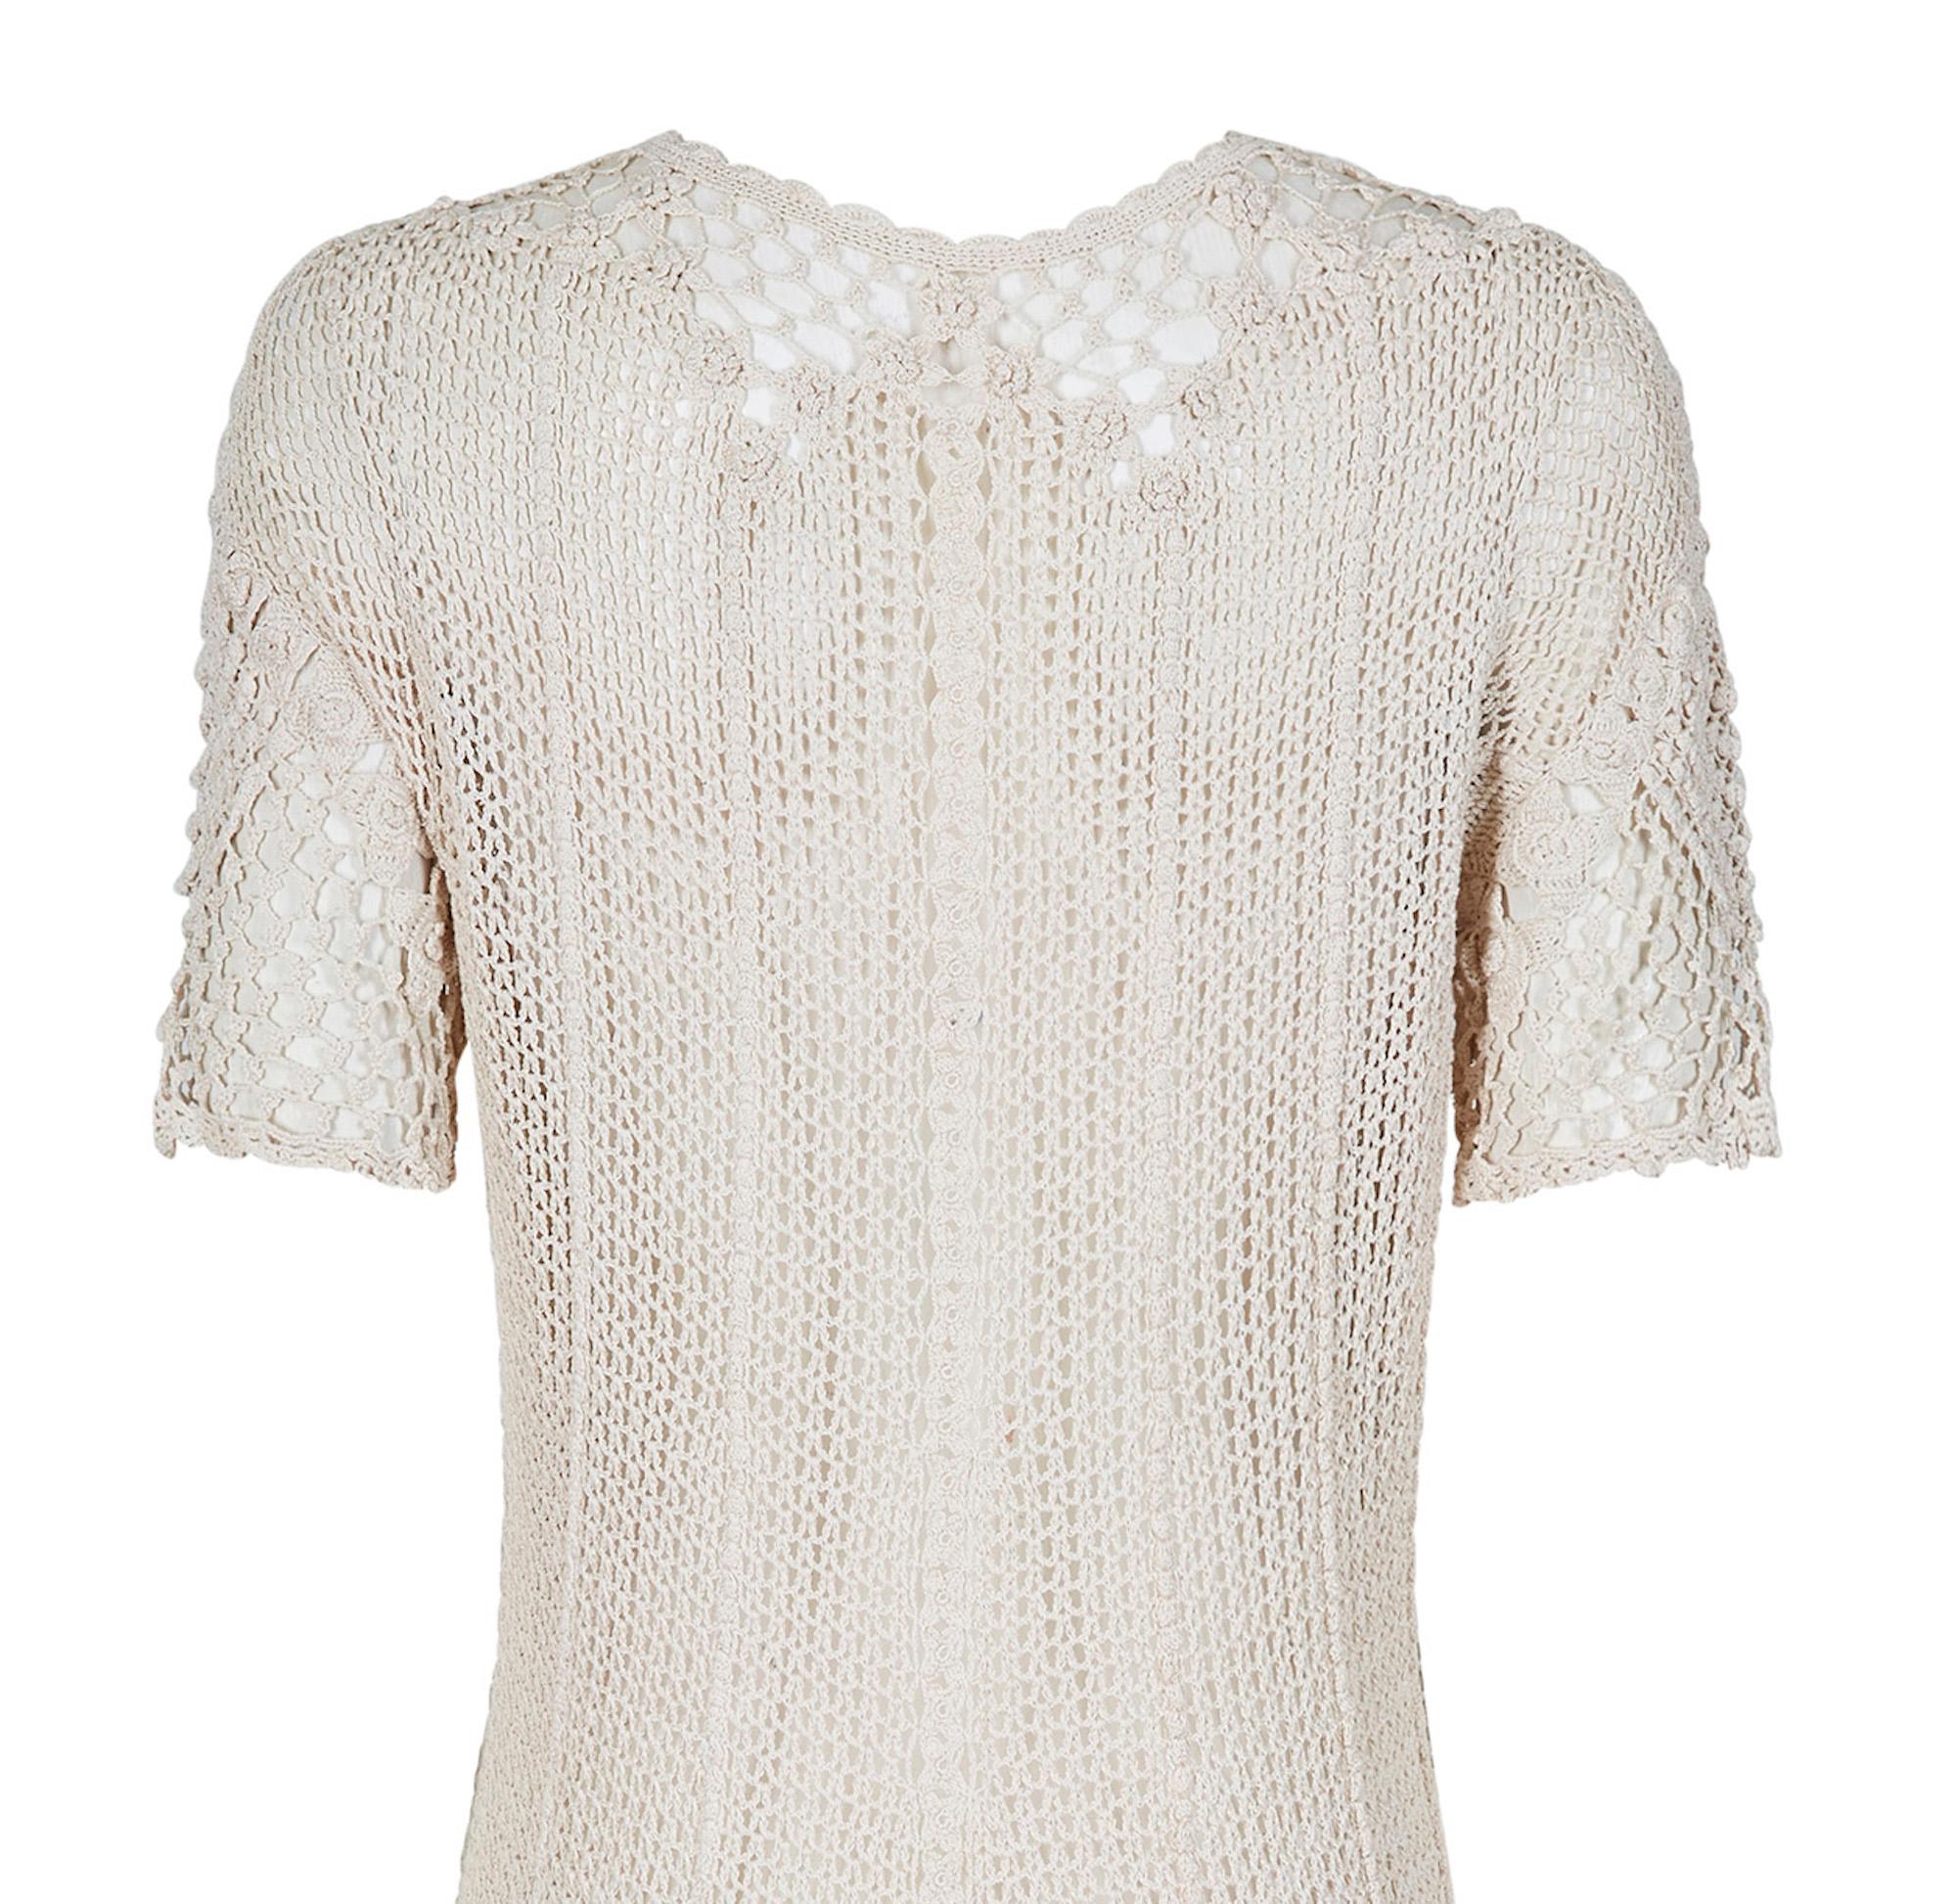 Beige Original 1930s Ivory Irish Hand Crochet Lace Dress With Floral Design 